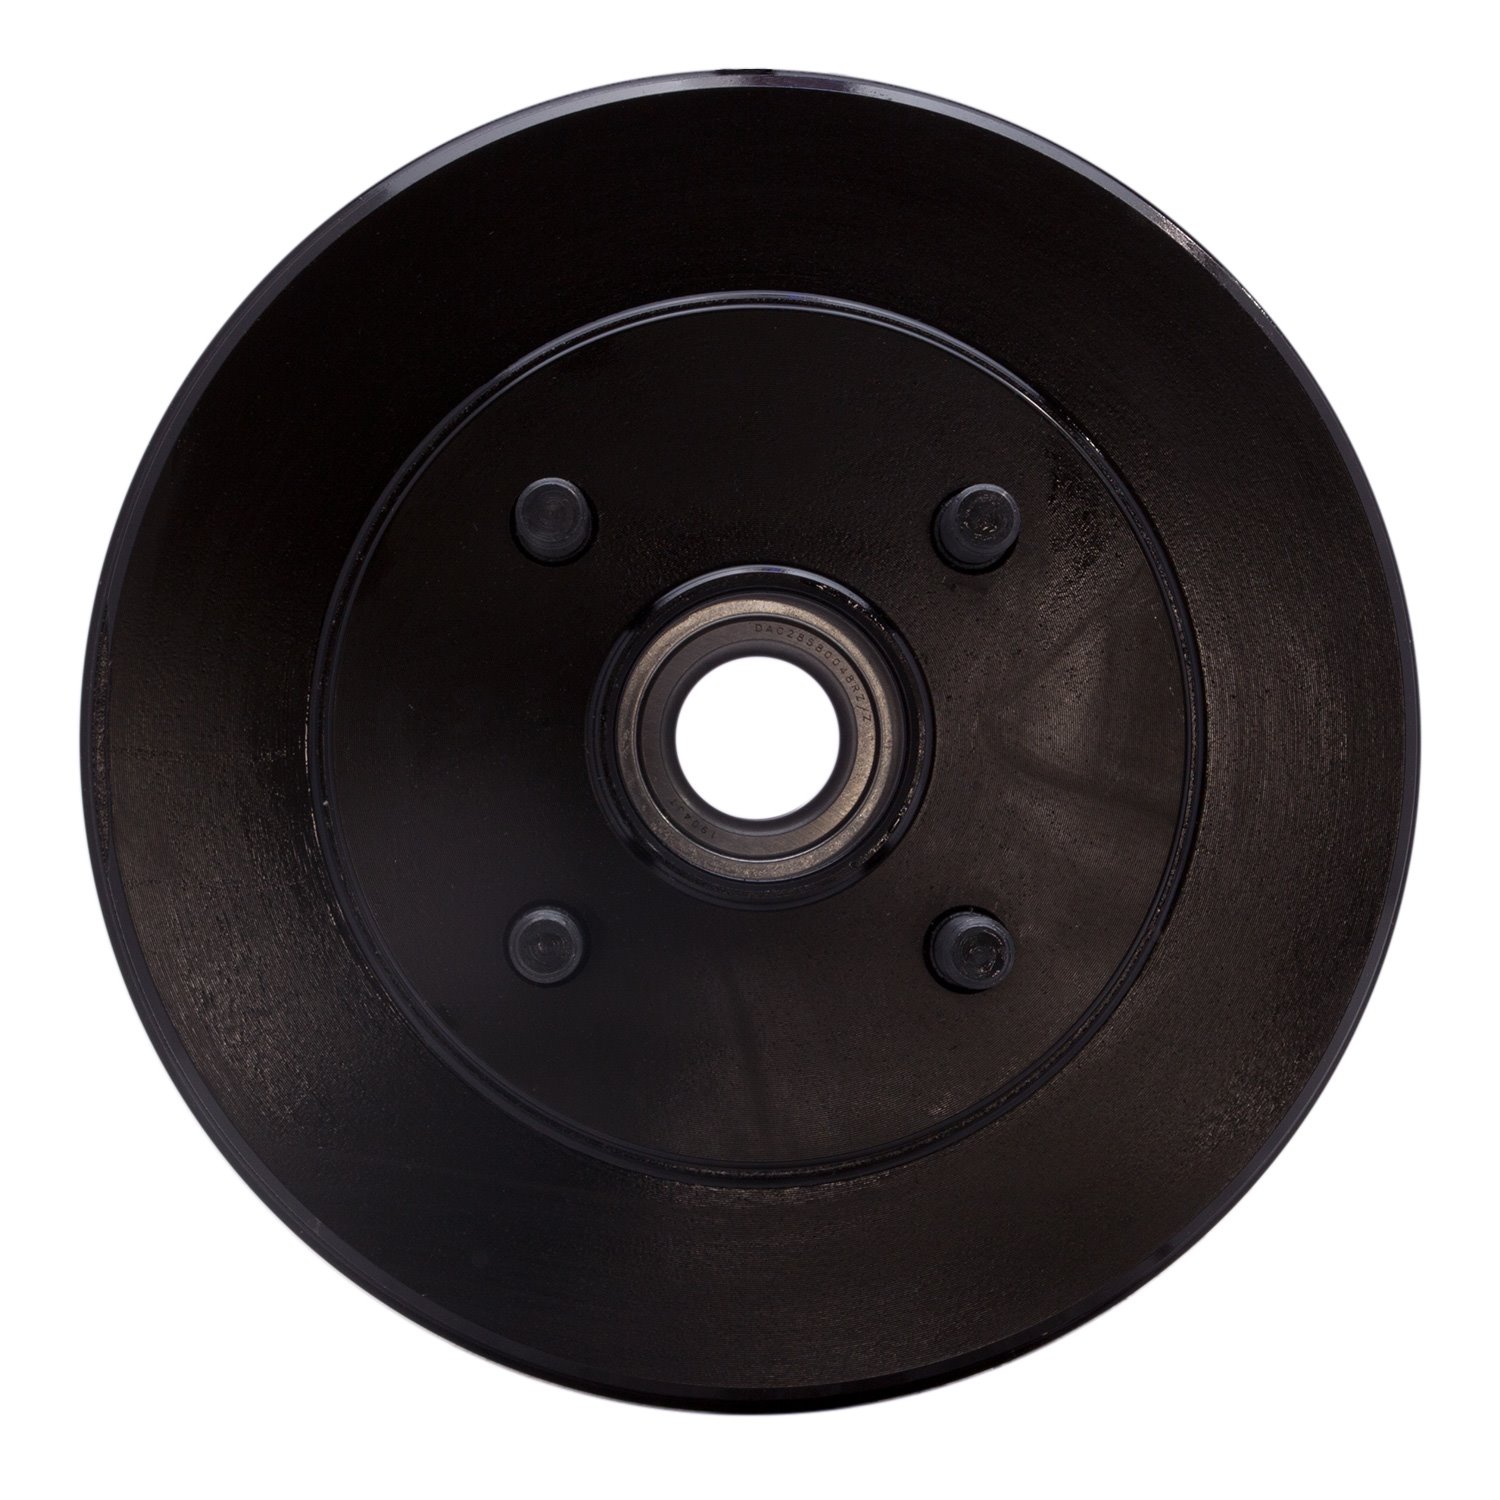 365-72018 True-Balanced Brake Drum, Fits Select Multiple Makes/Models, Position: Rear